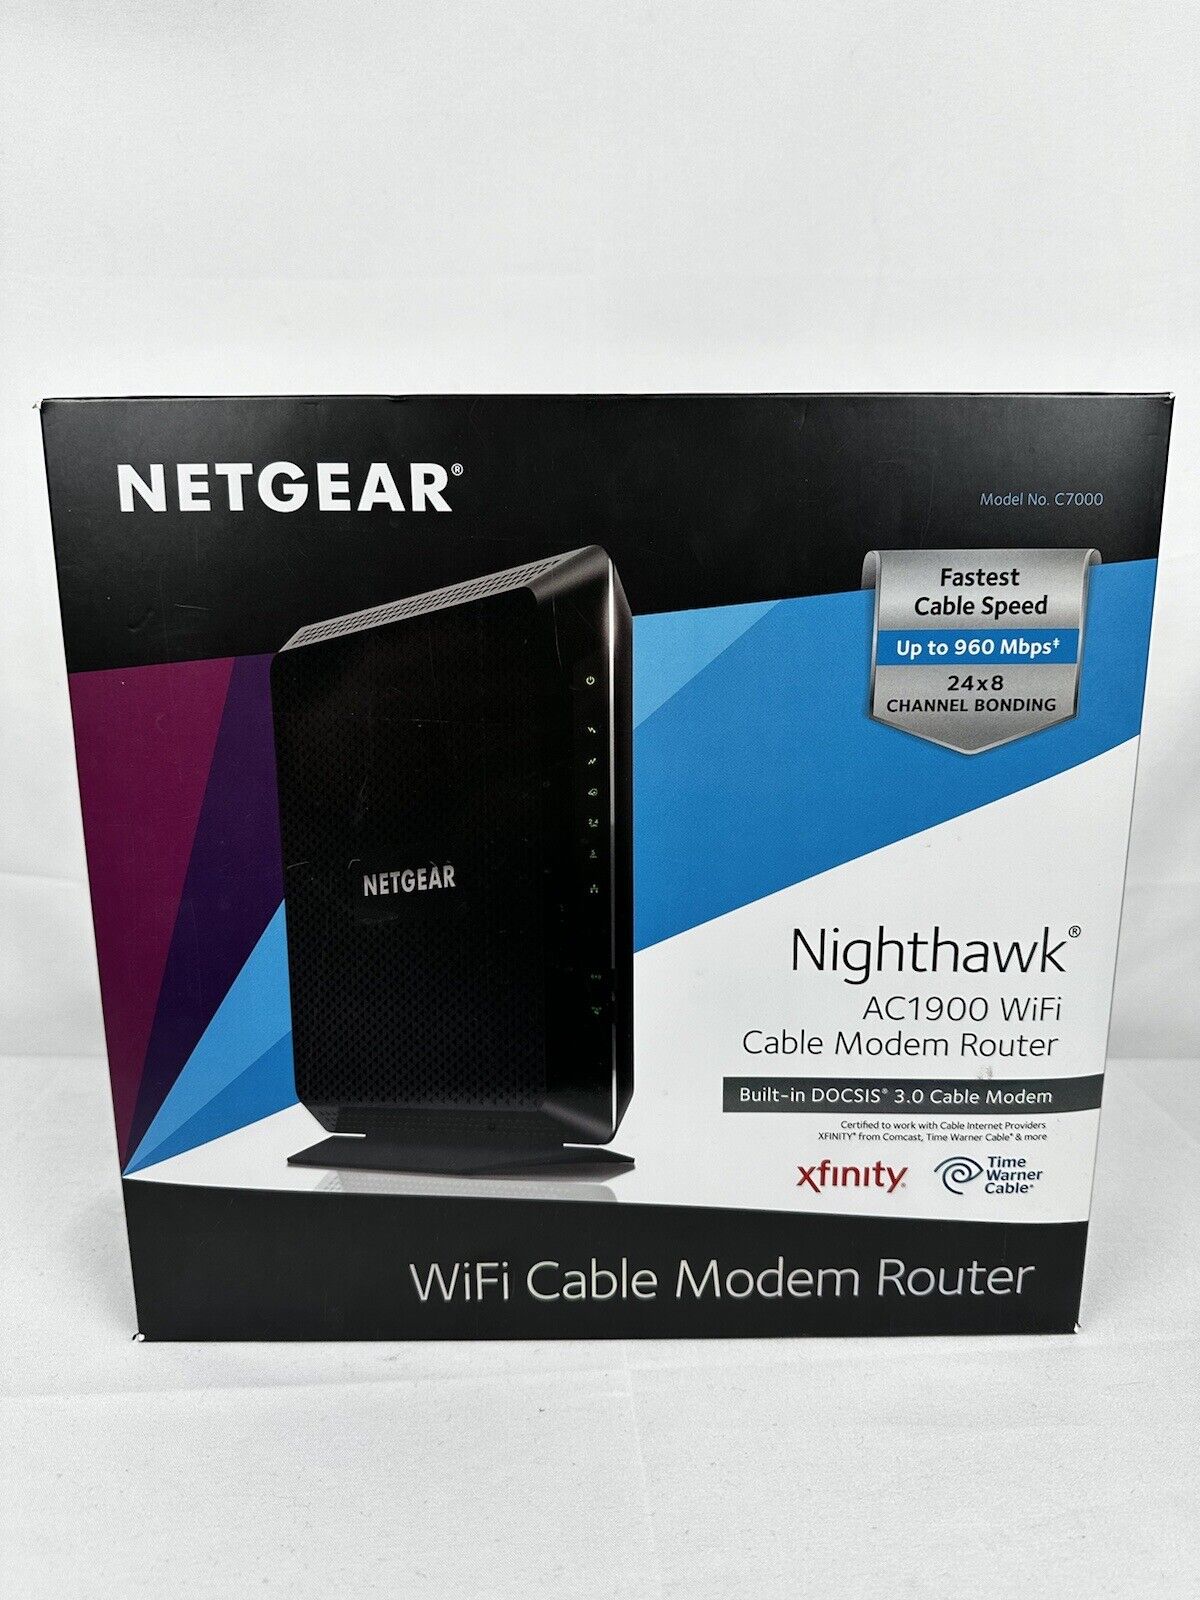 NETGEAR Nighthawk C7000-100NAS AC1900 WiFi Cable Modem Router DOCSIS 3.0